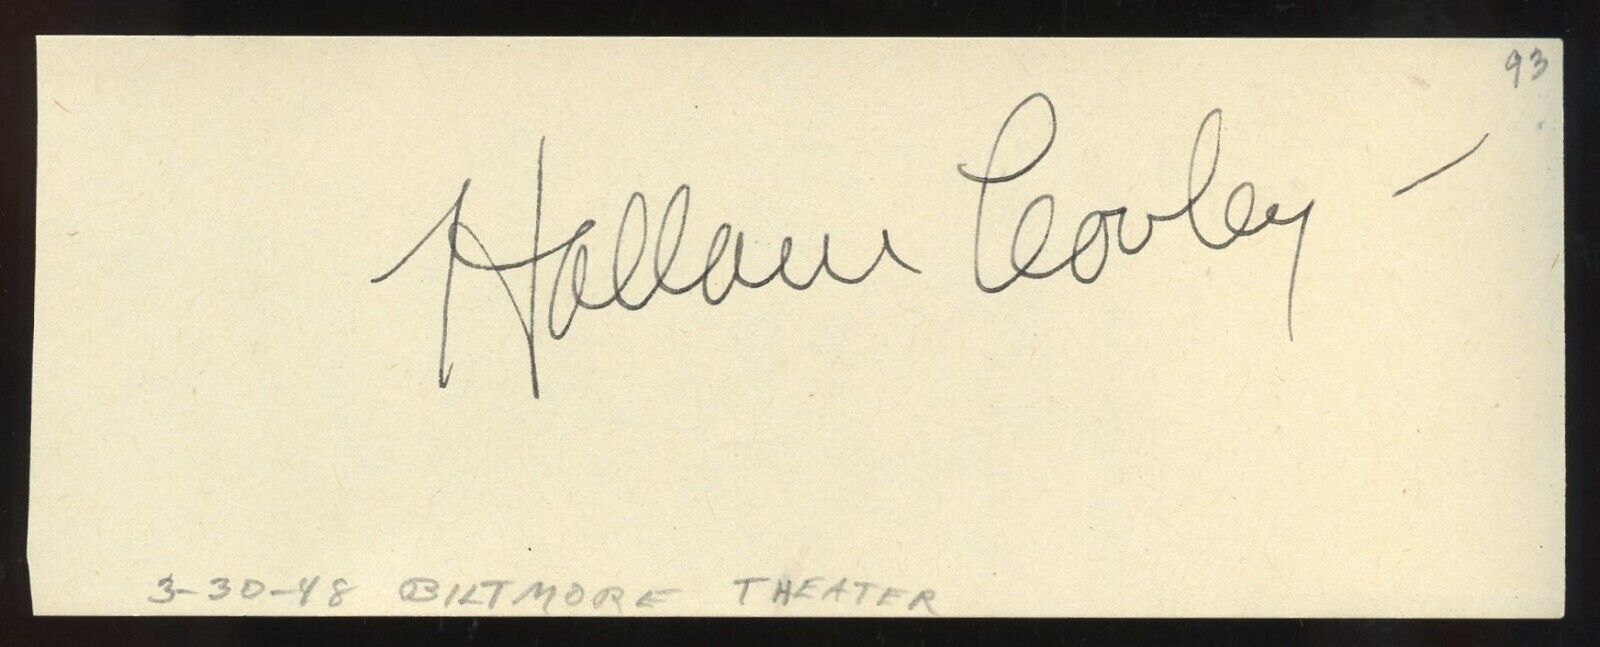 Hallam Cooley d1971 signed 2x5 cut autograph on 3-30-48 at Biltmore Theater LA